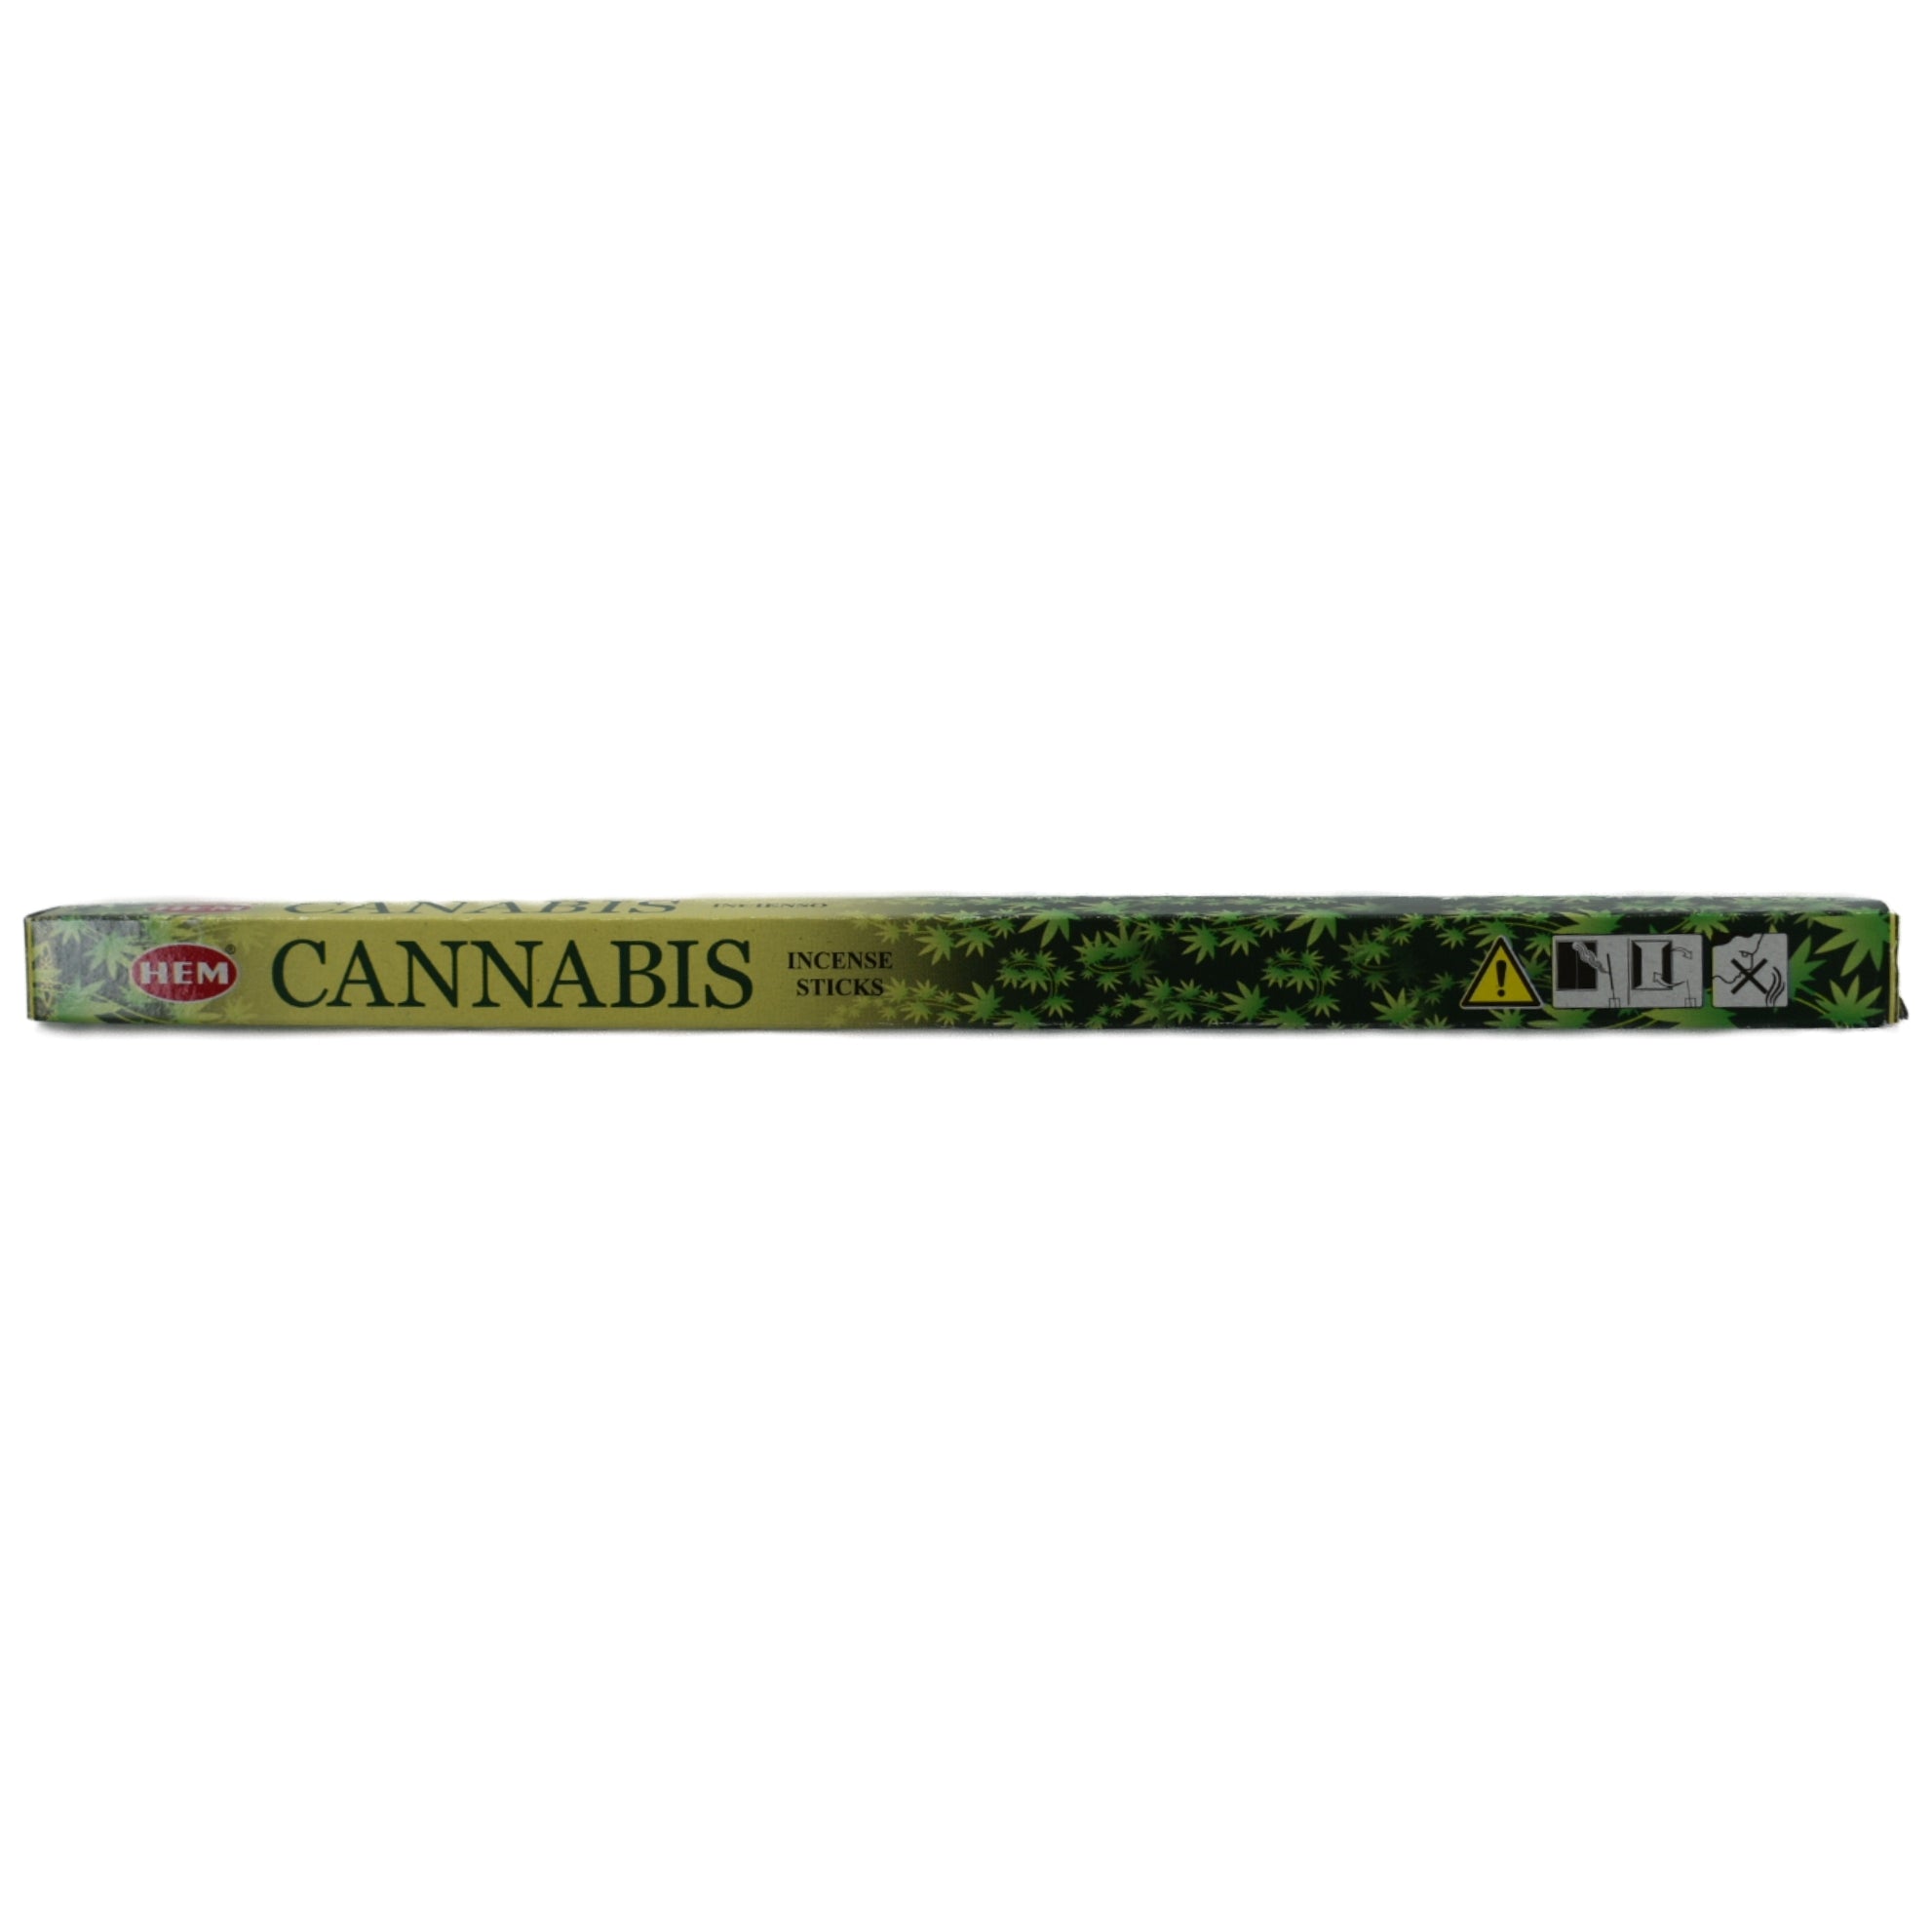 Cannabis Incense Sticks.